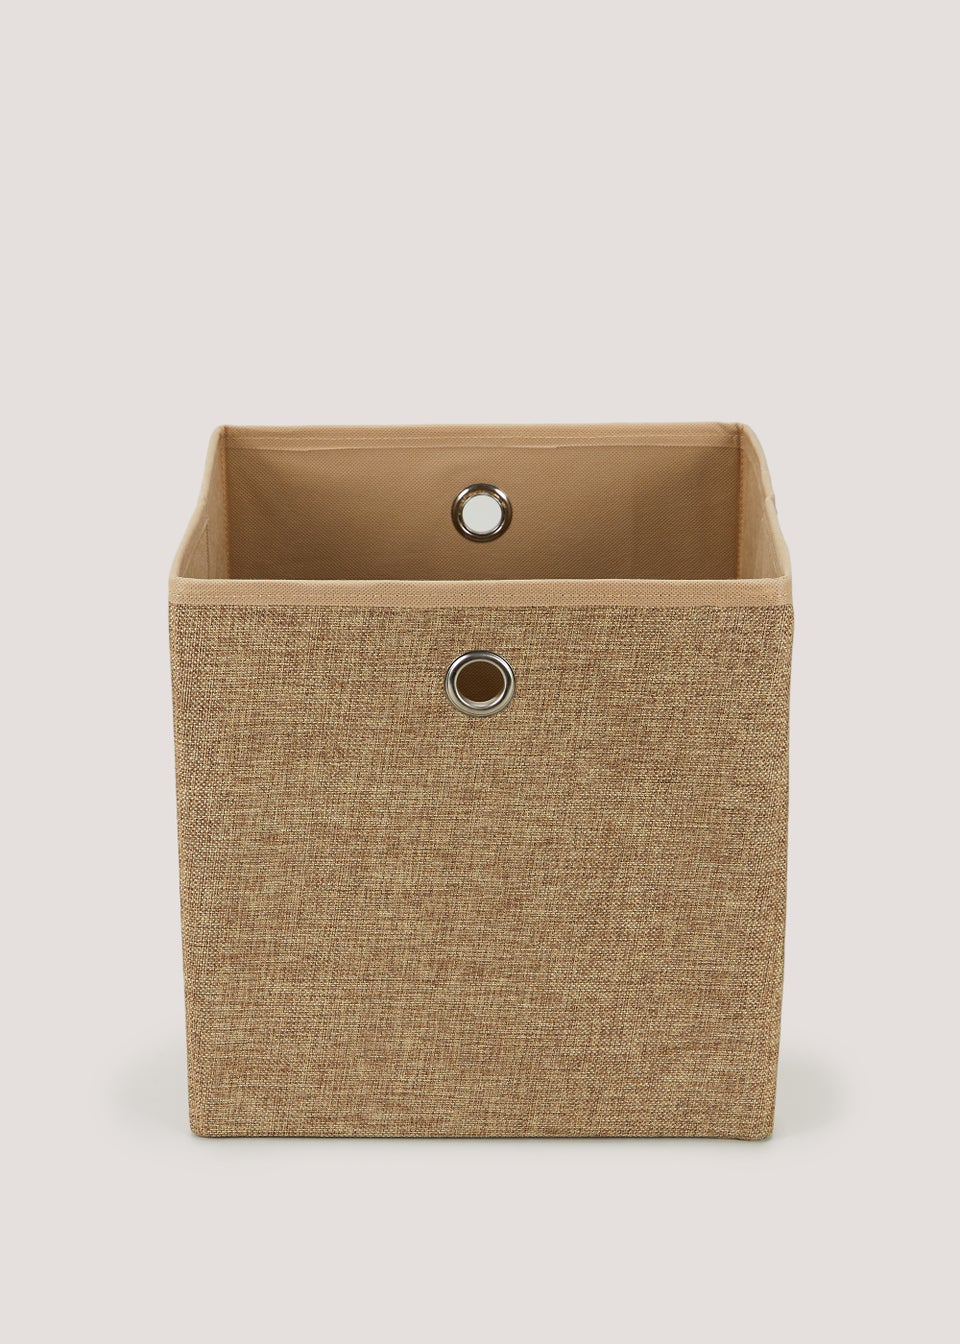 Taupe Foldable Storage Box (27cm x 27cm x 27cm)